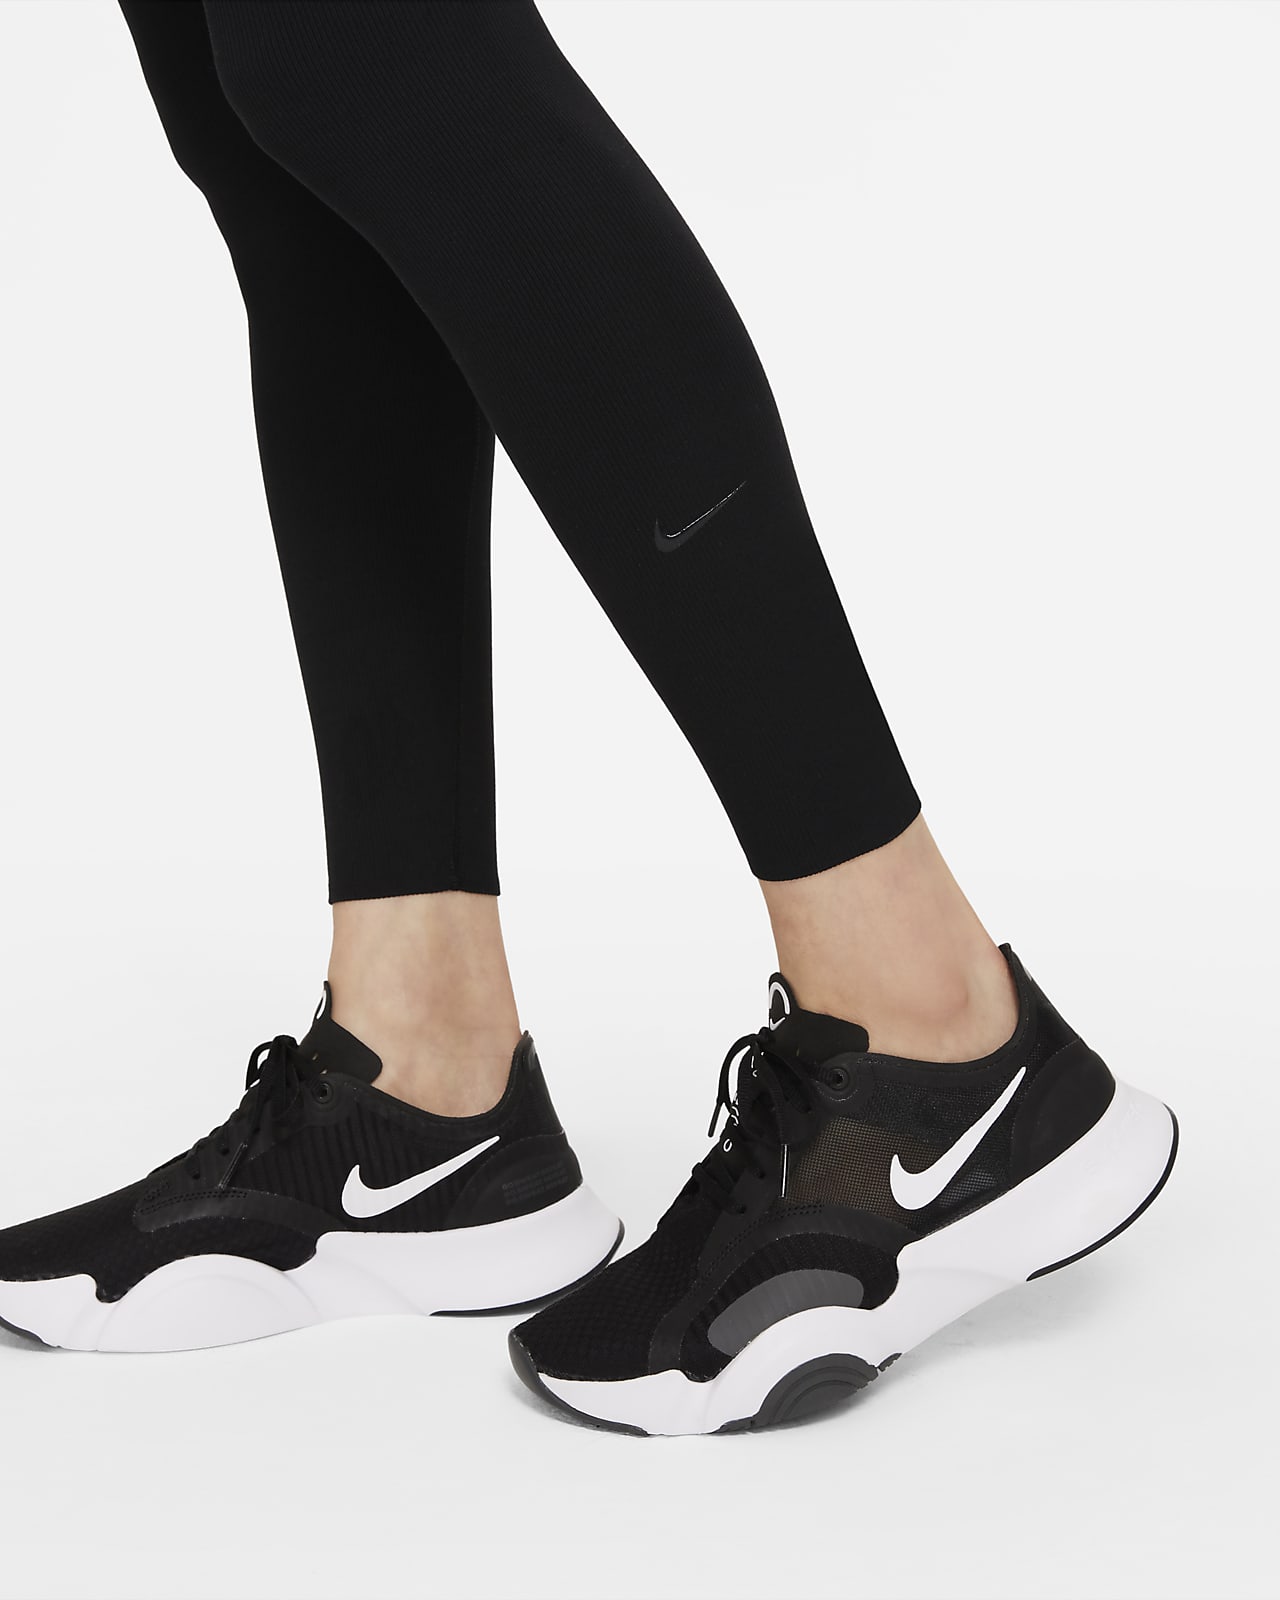 Nike leggings One Luxe női